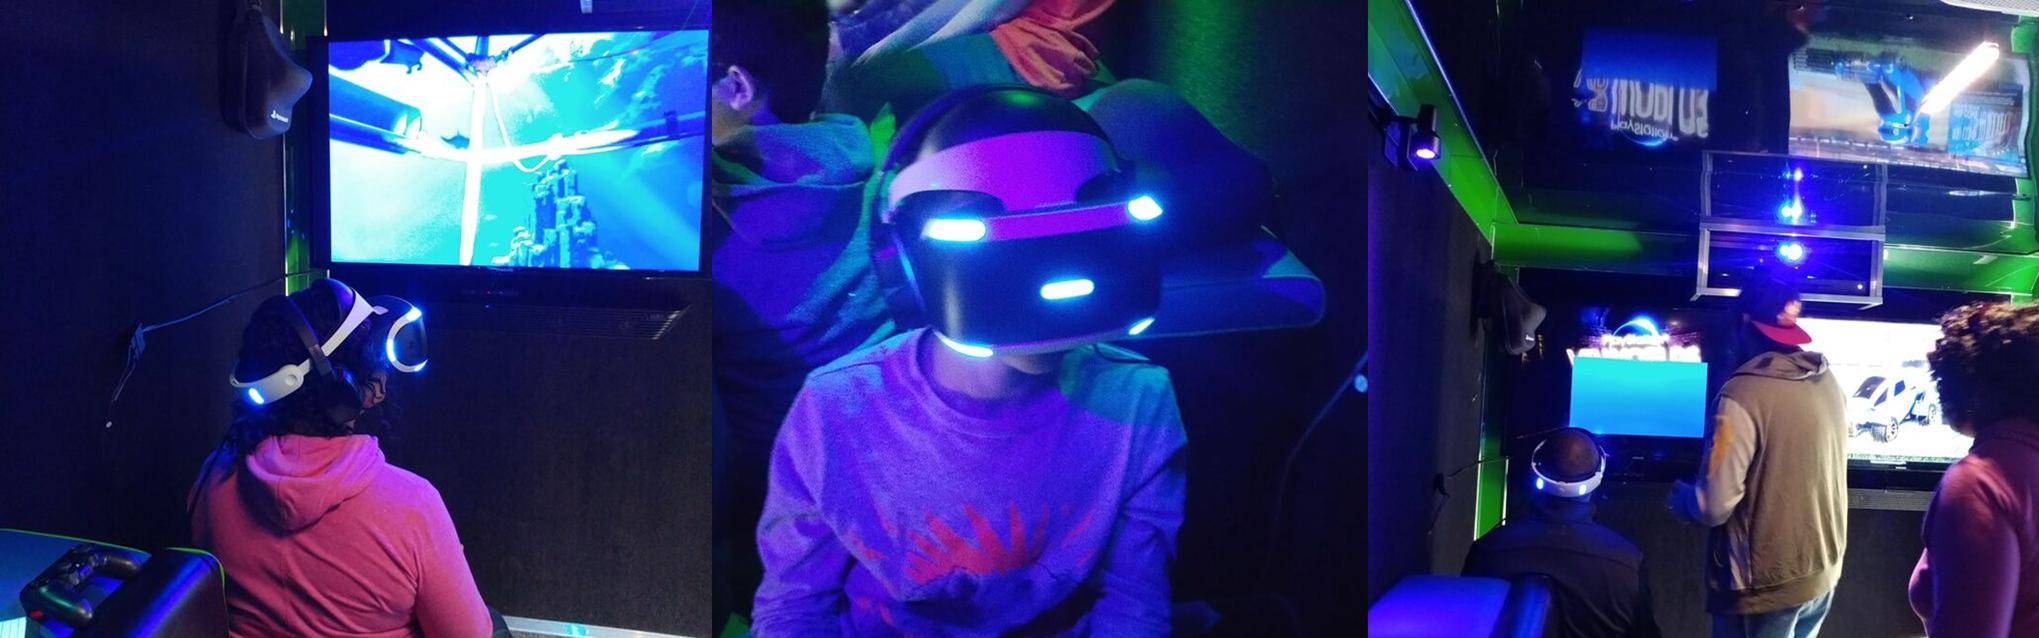 Collage of virtual reality gaming photos - Calgary, Alberta birthday party